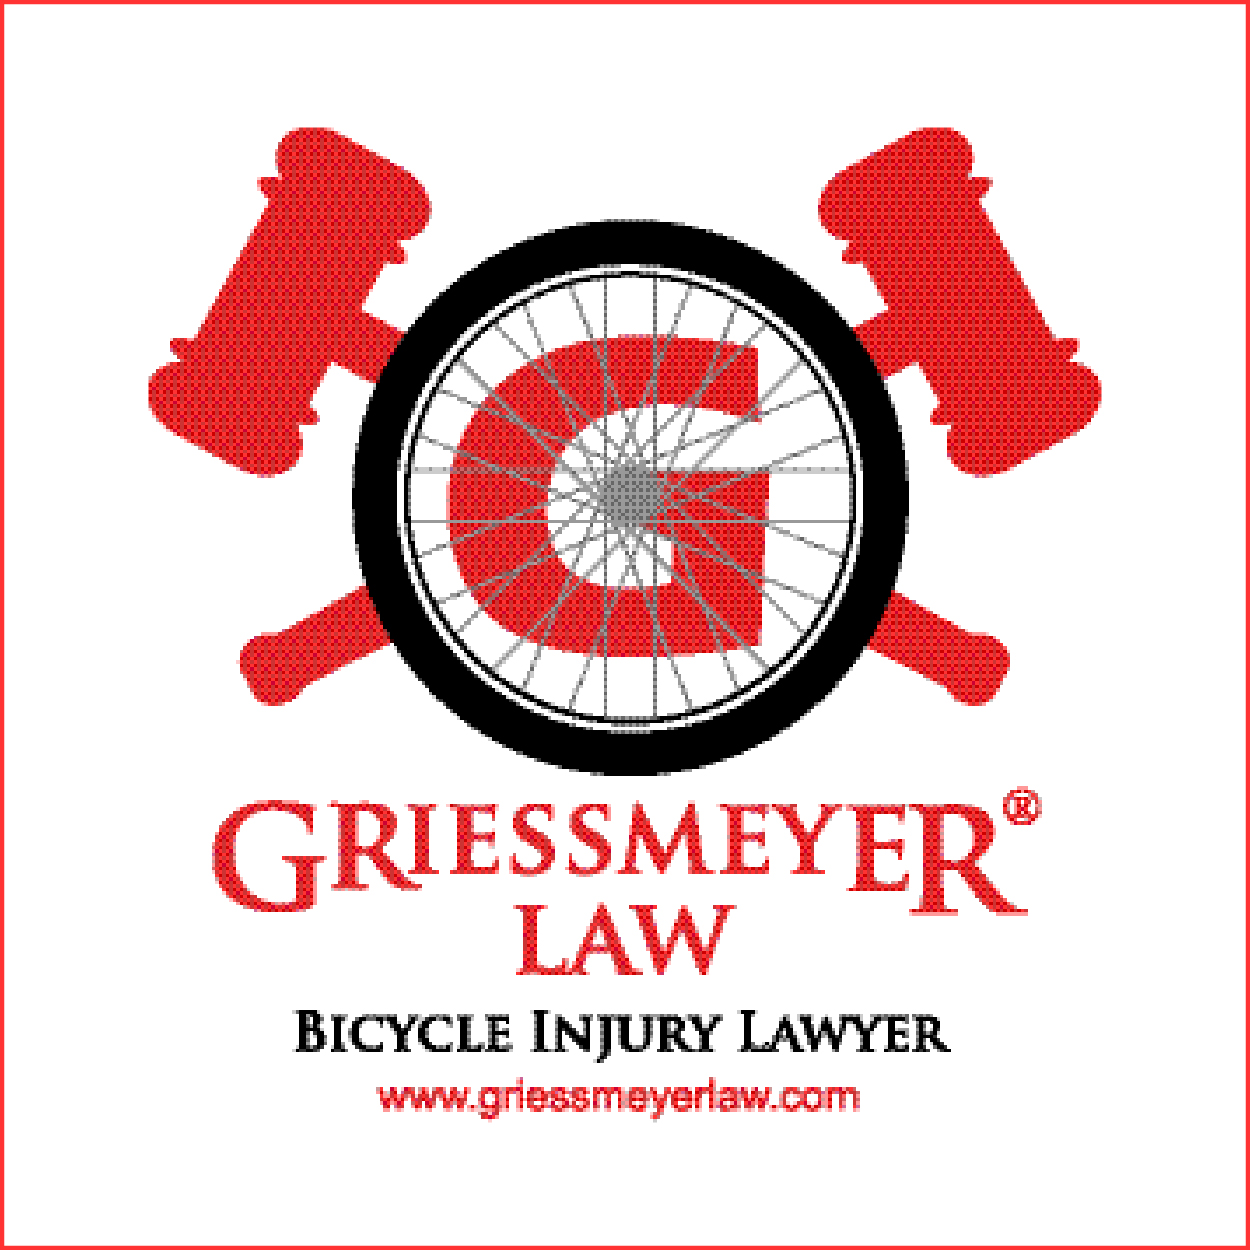 Greissmeyer Law